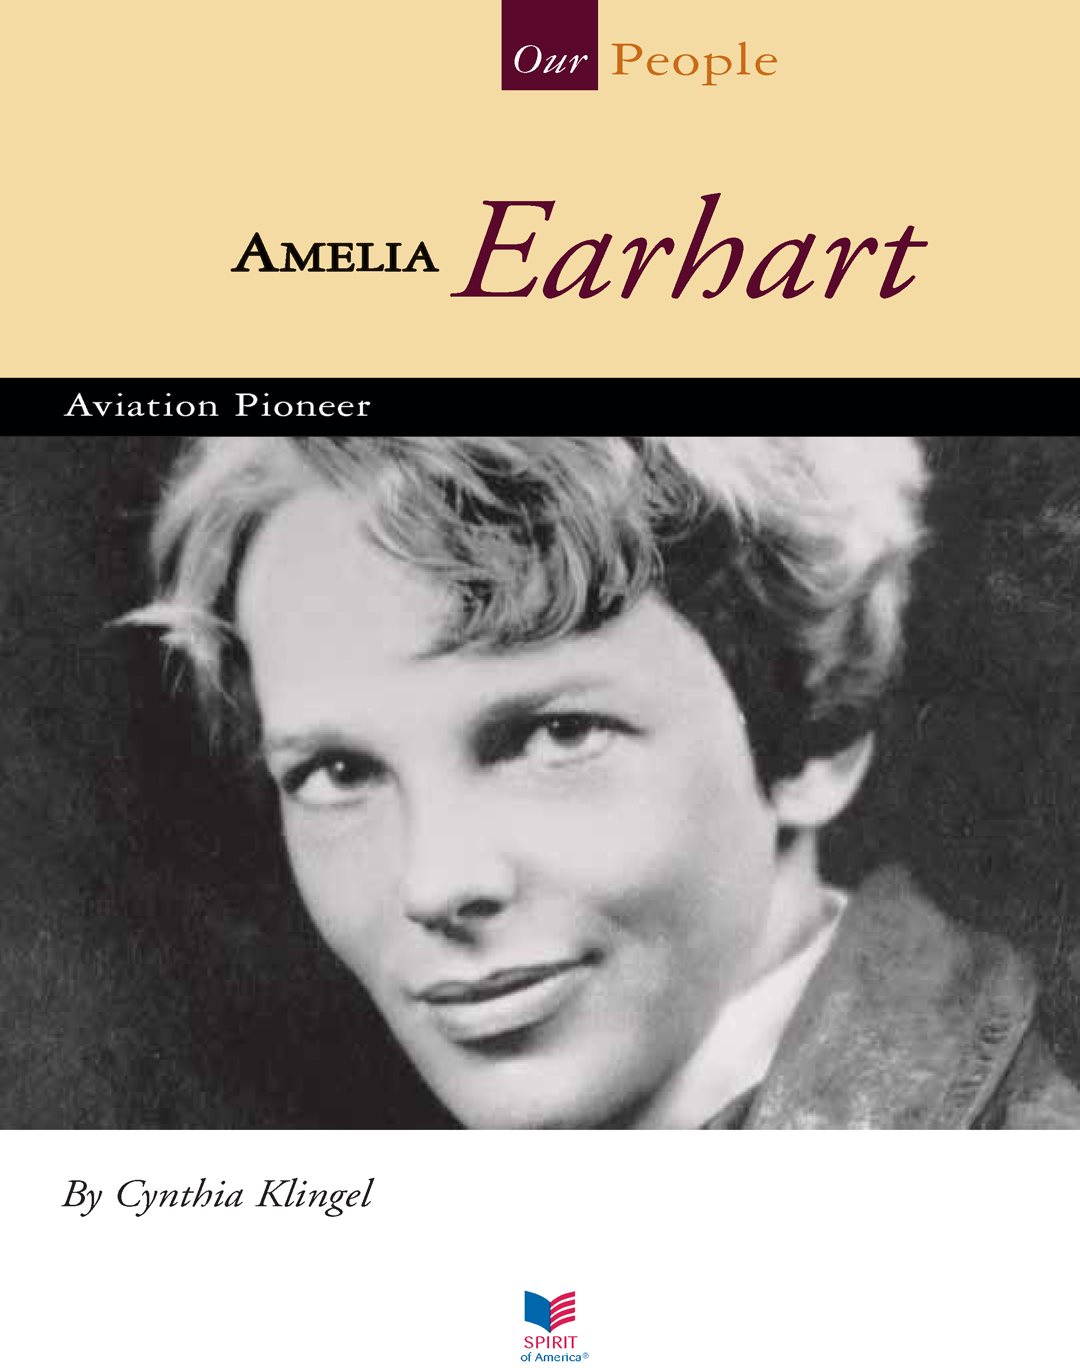 Amelia Earhart Aviation Pioneer - photo 1